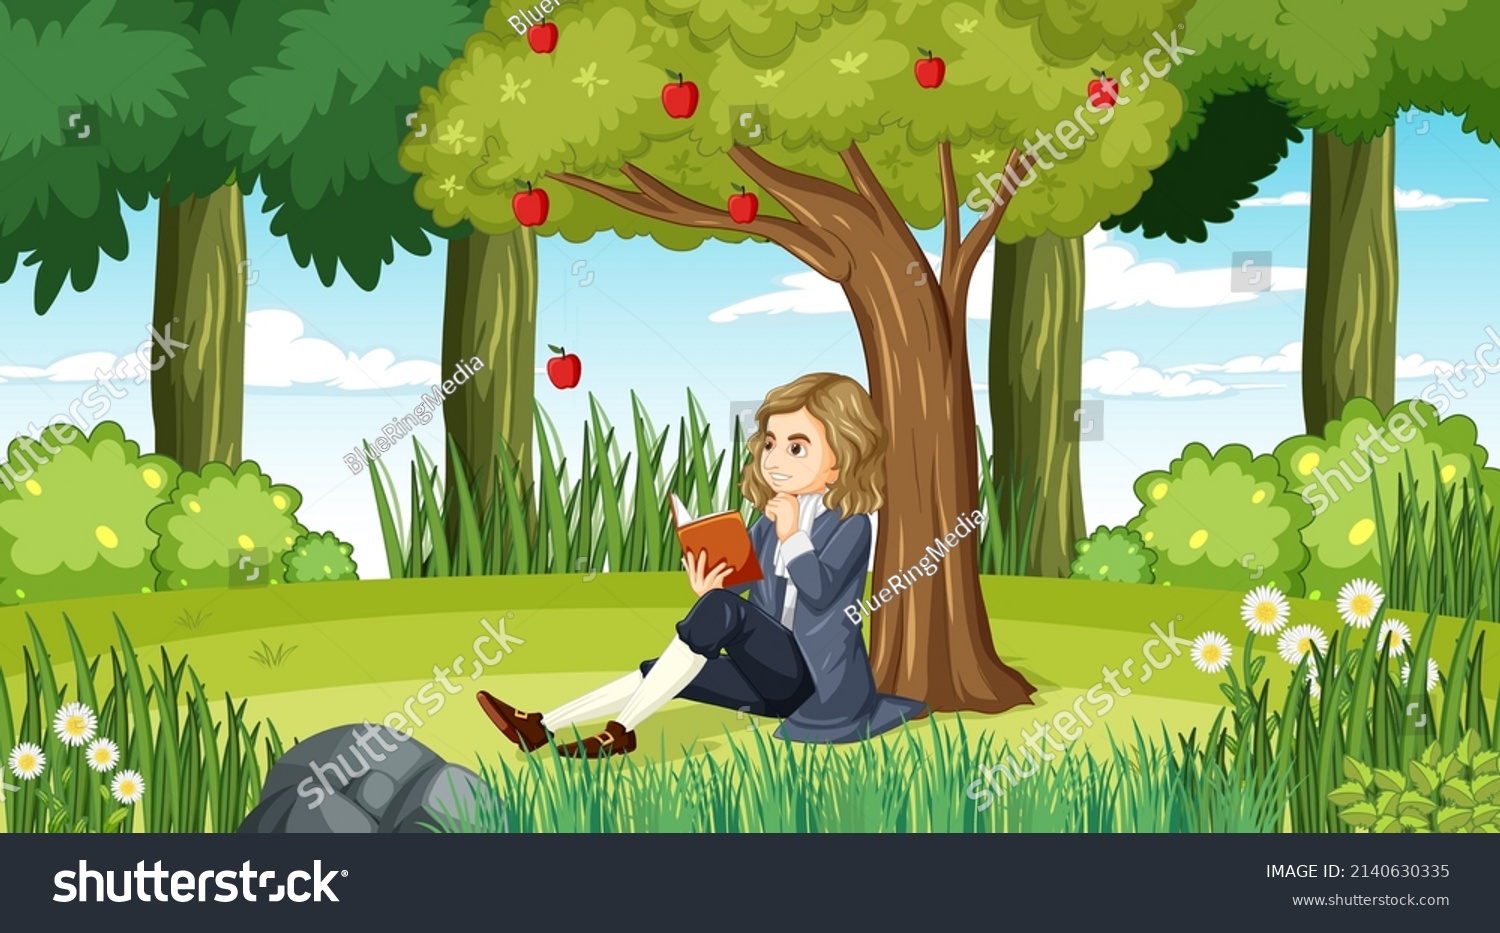 Isaac Newton Sitting Under Apple Tree Stock Vector Royalty Free 2140630335 Shutterstock 6251